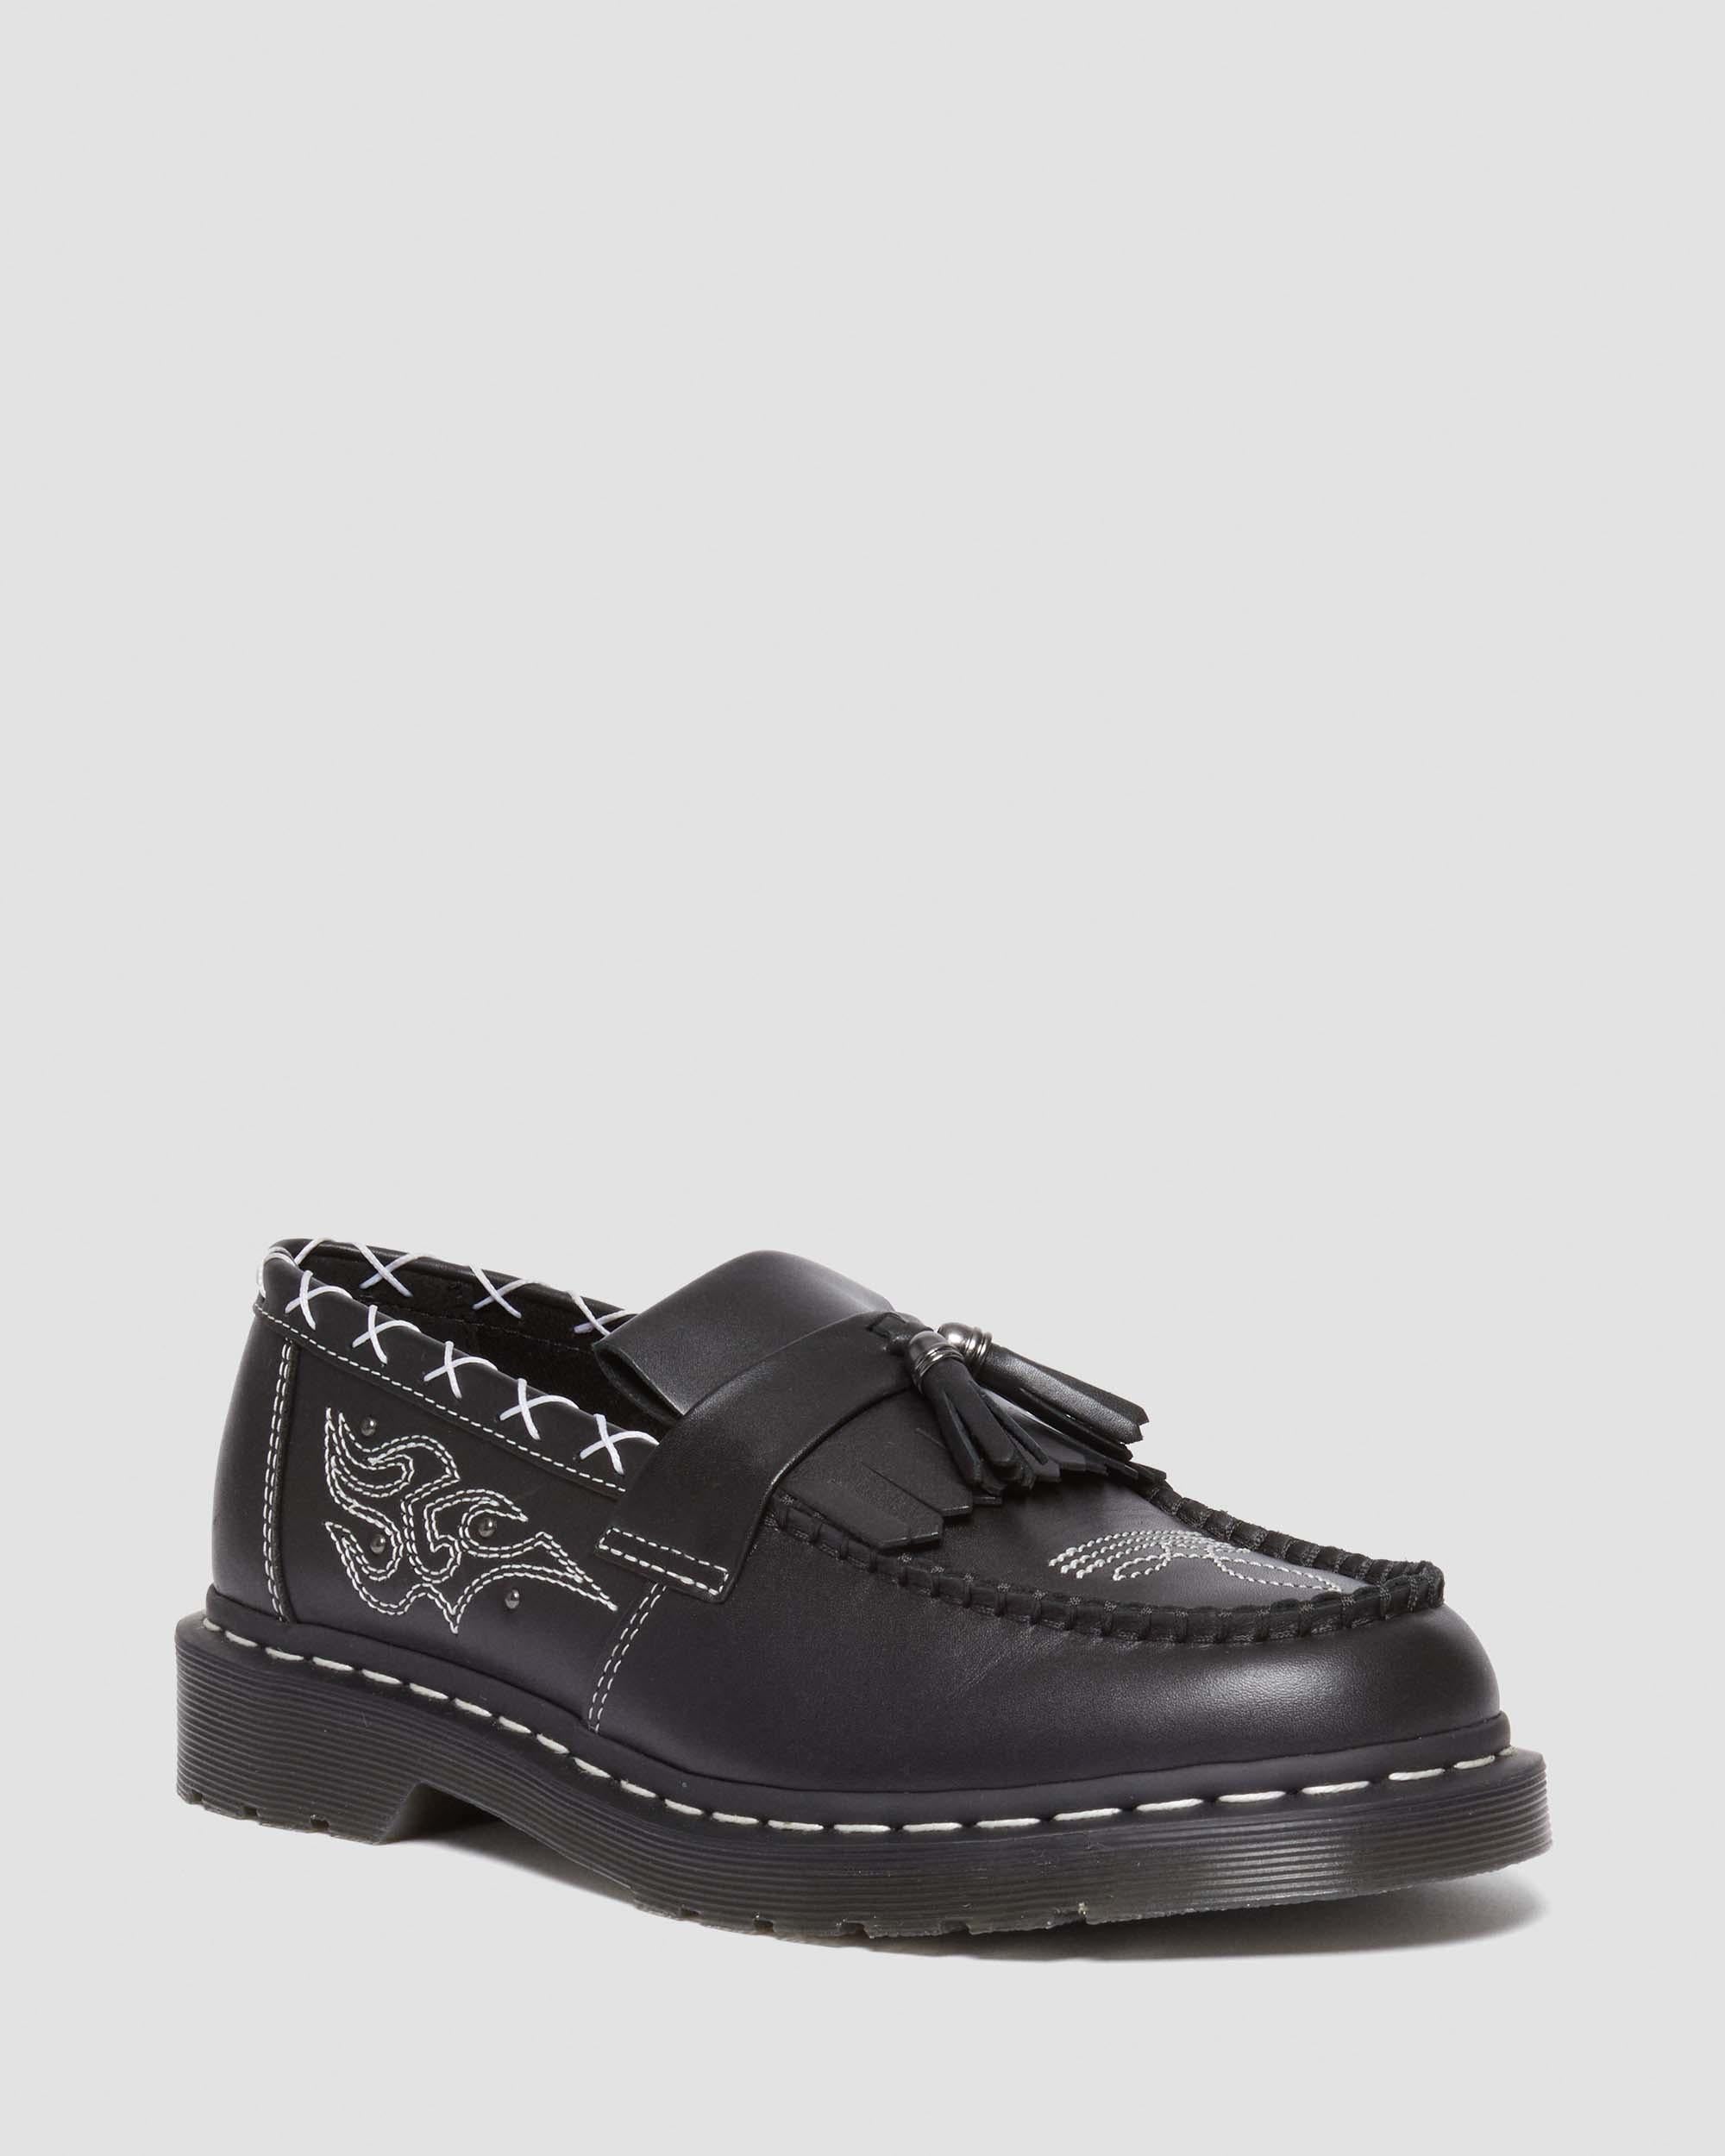 Adrian Ga Wanama Leather Shoes